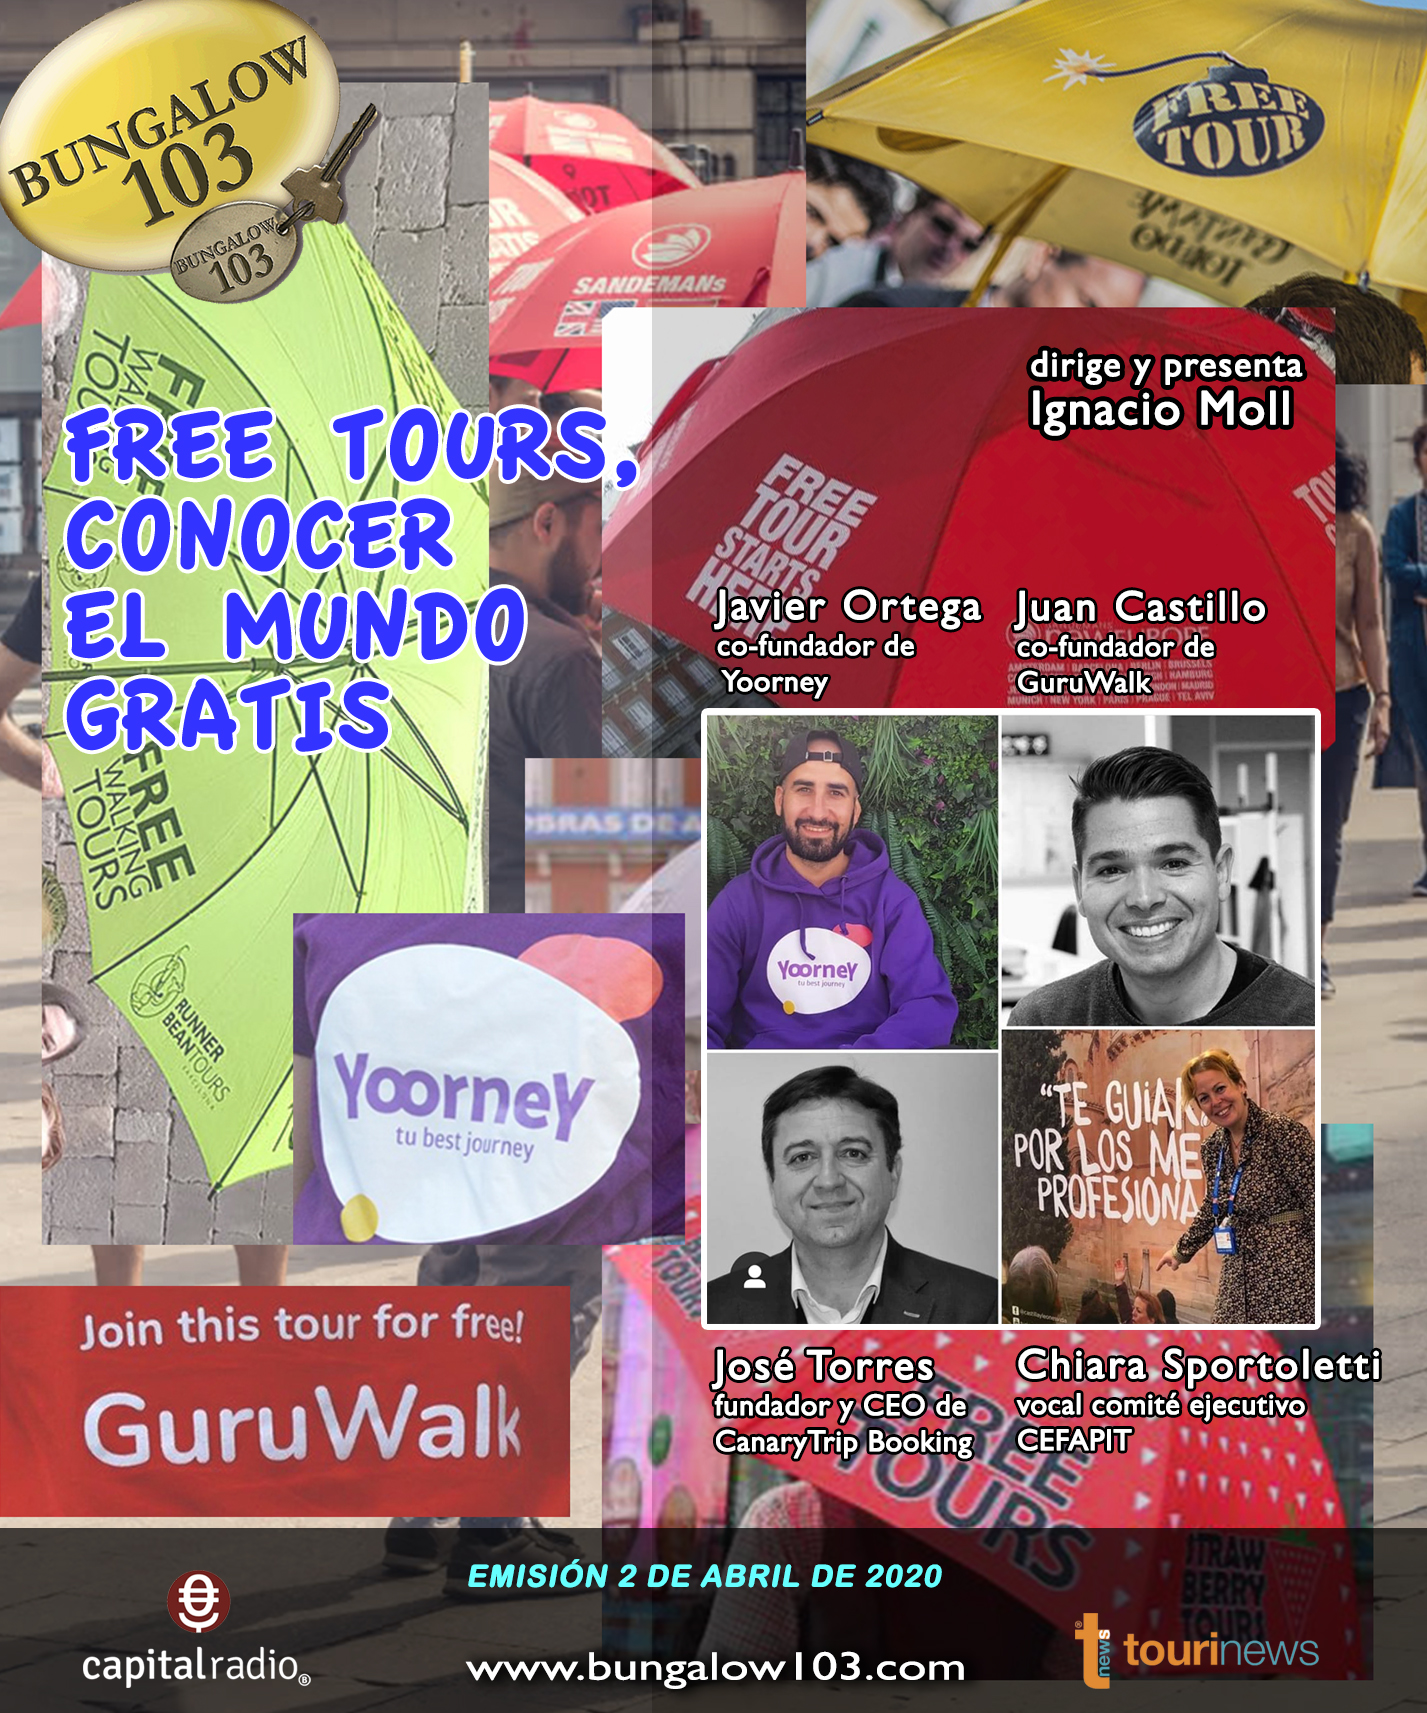 FREE TOURS, CONOCER EL MUNDO GRATIS